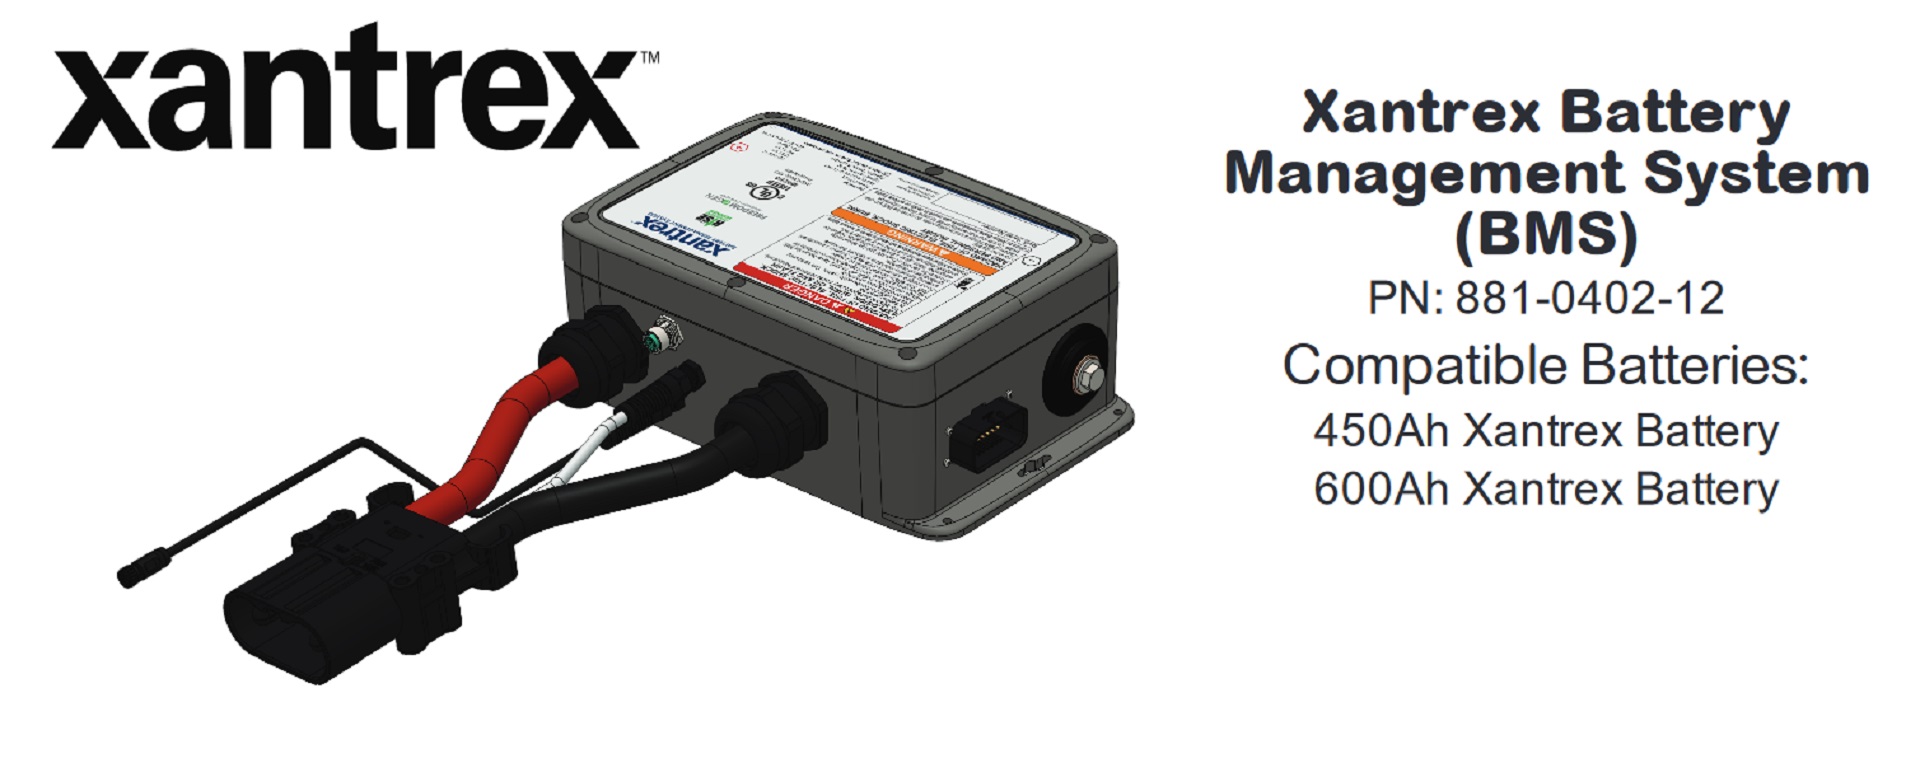 A photo of a Xantrex external battery management system.